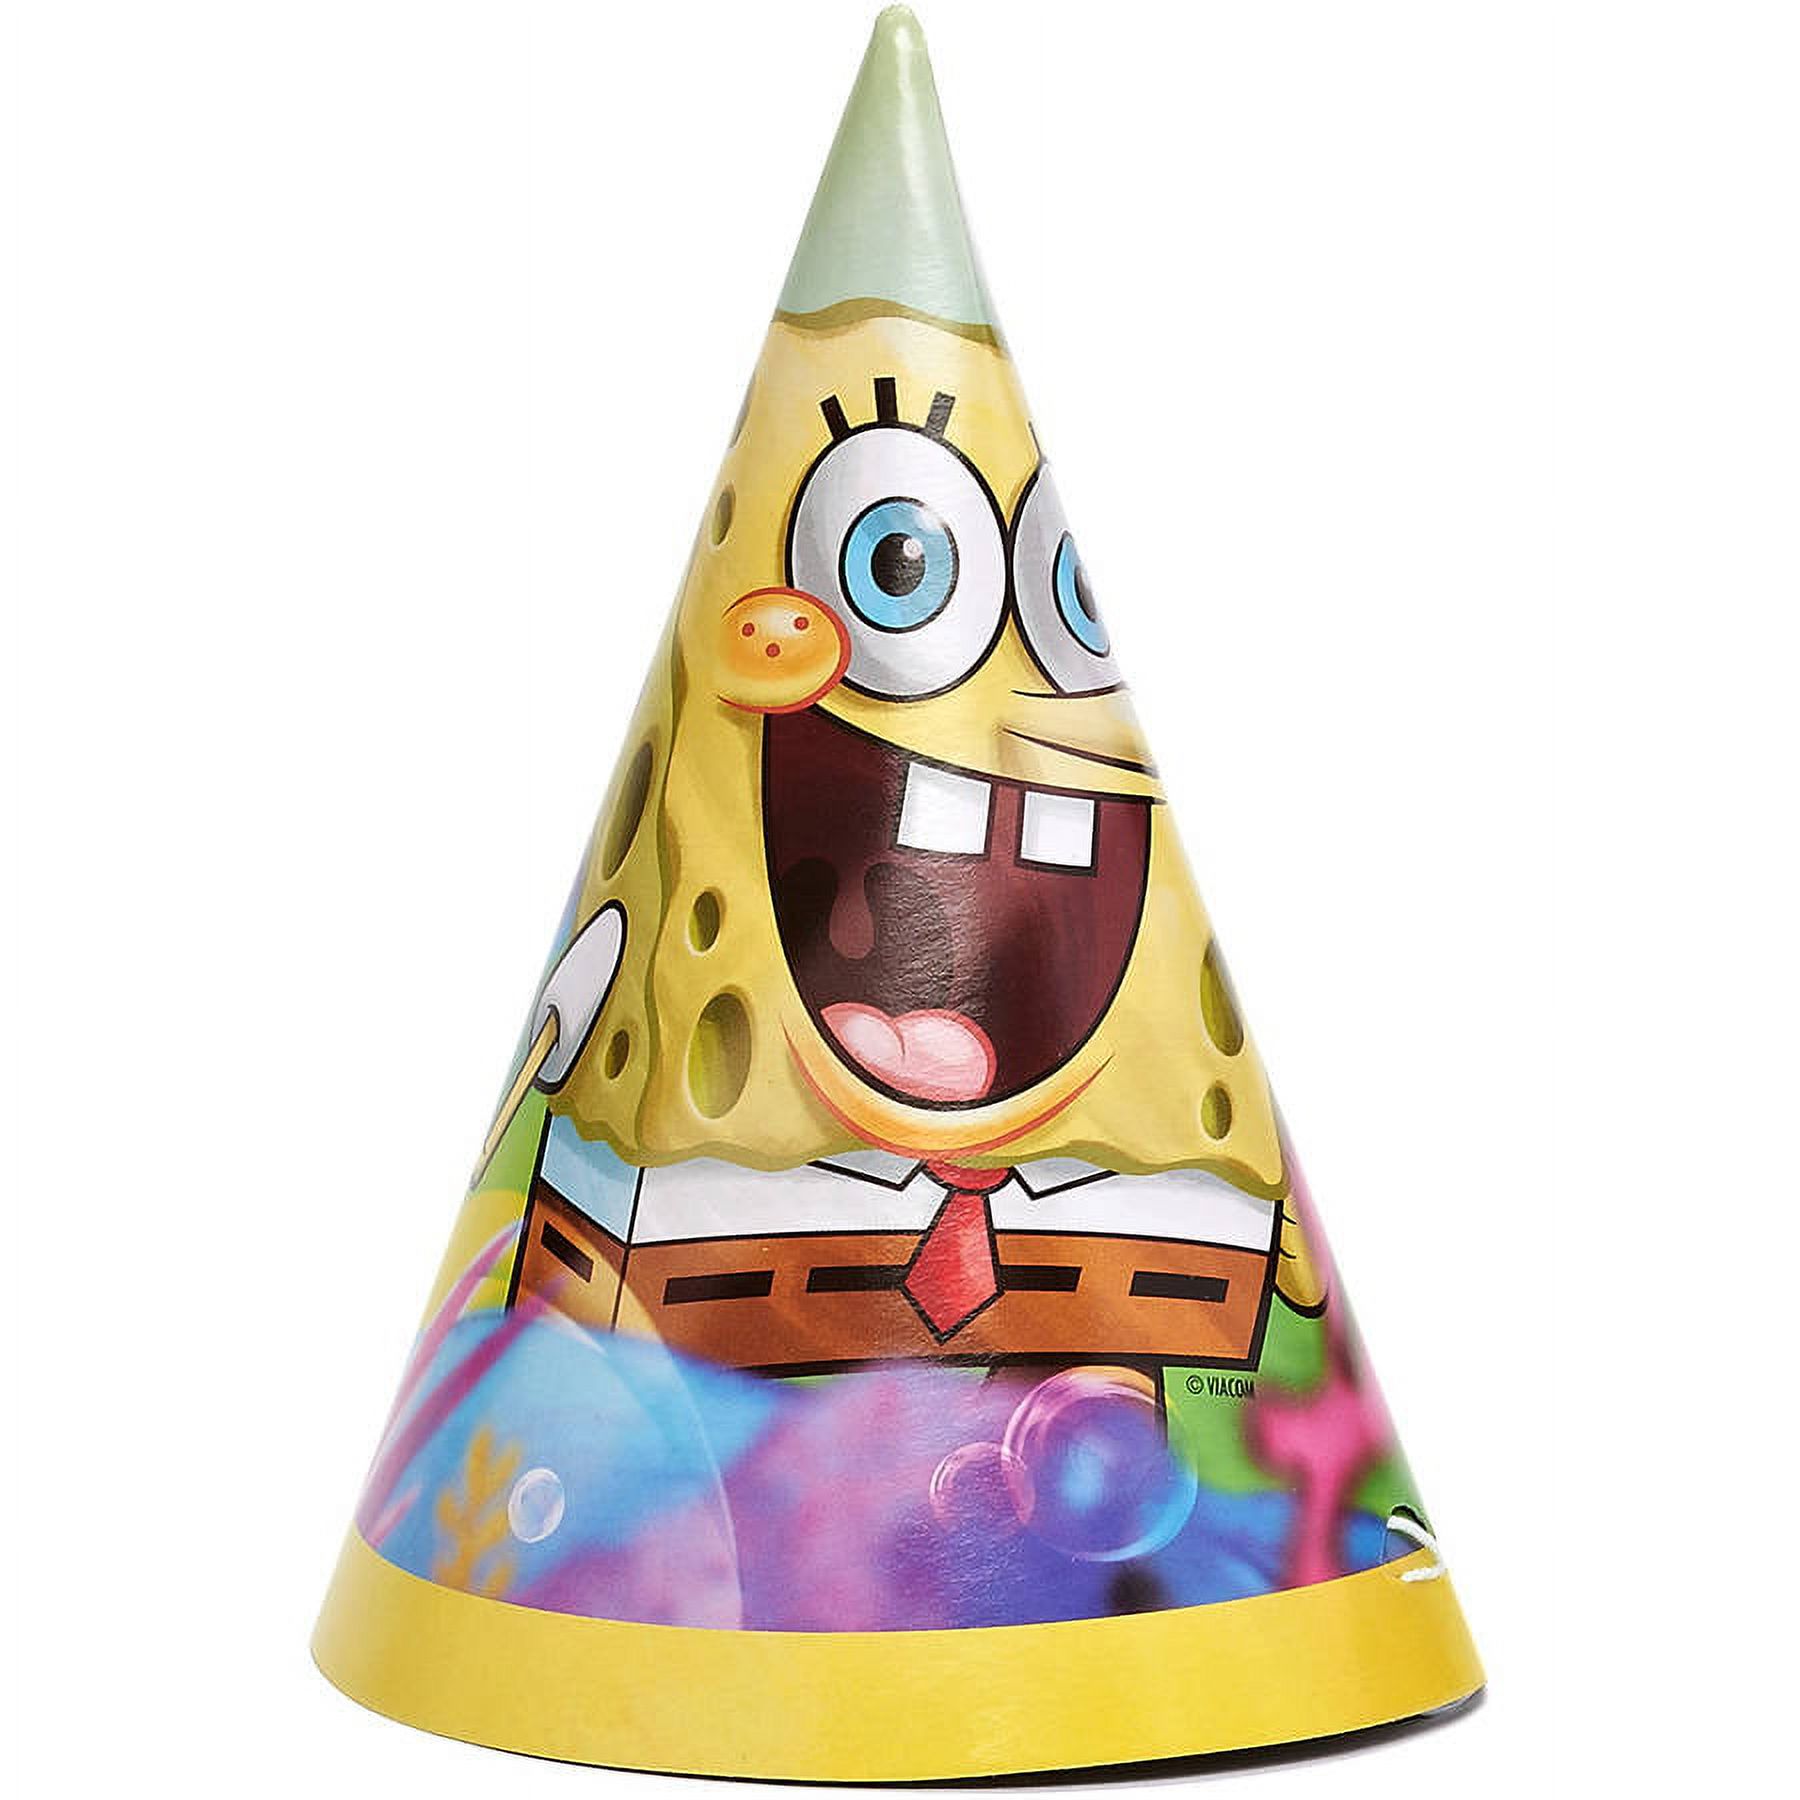 SpongeBob SquarePants Party Hats, 8ct - image 1 of 4